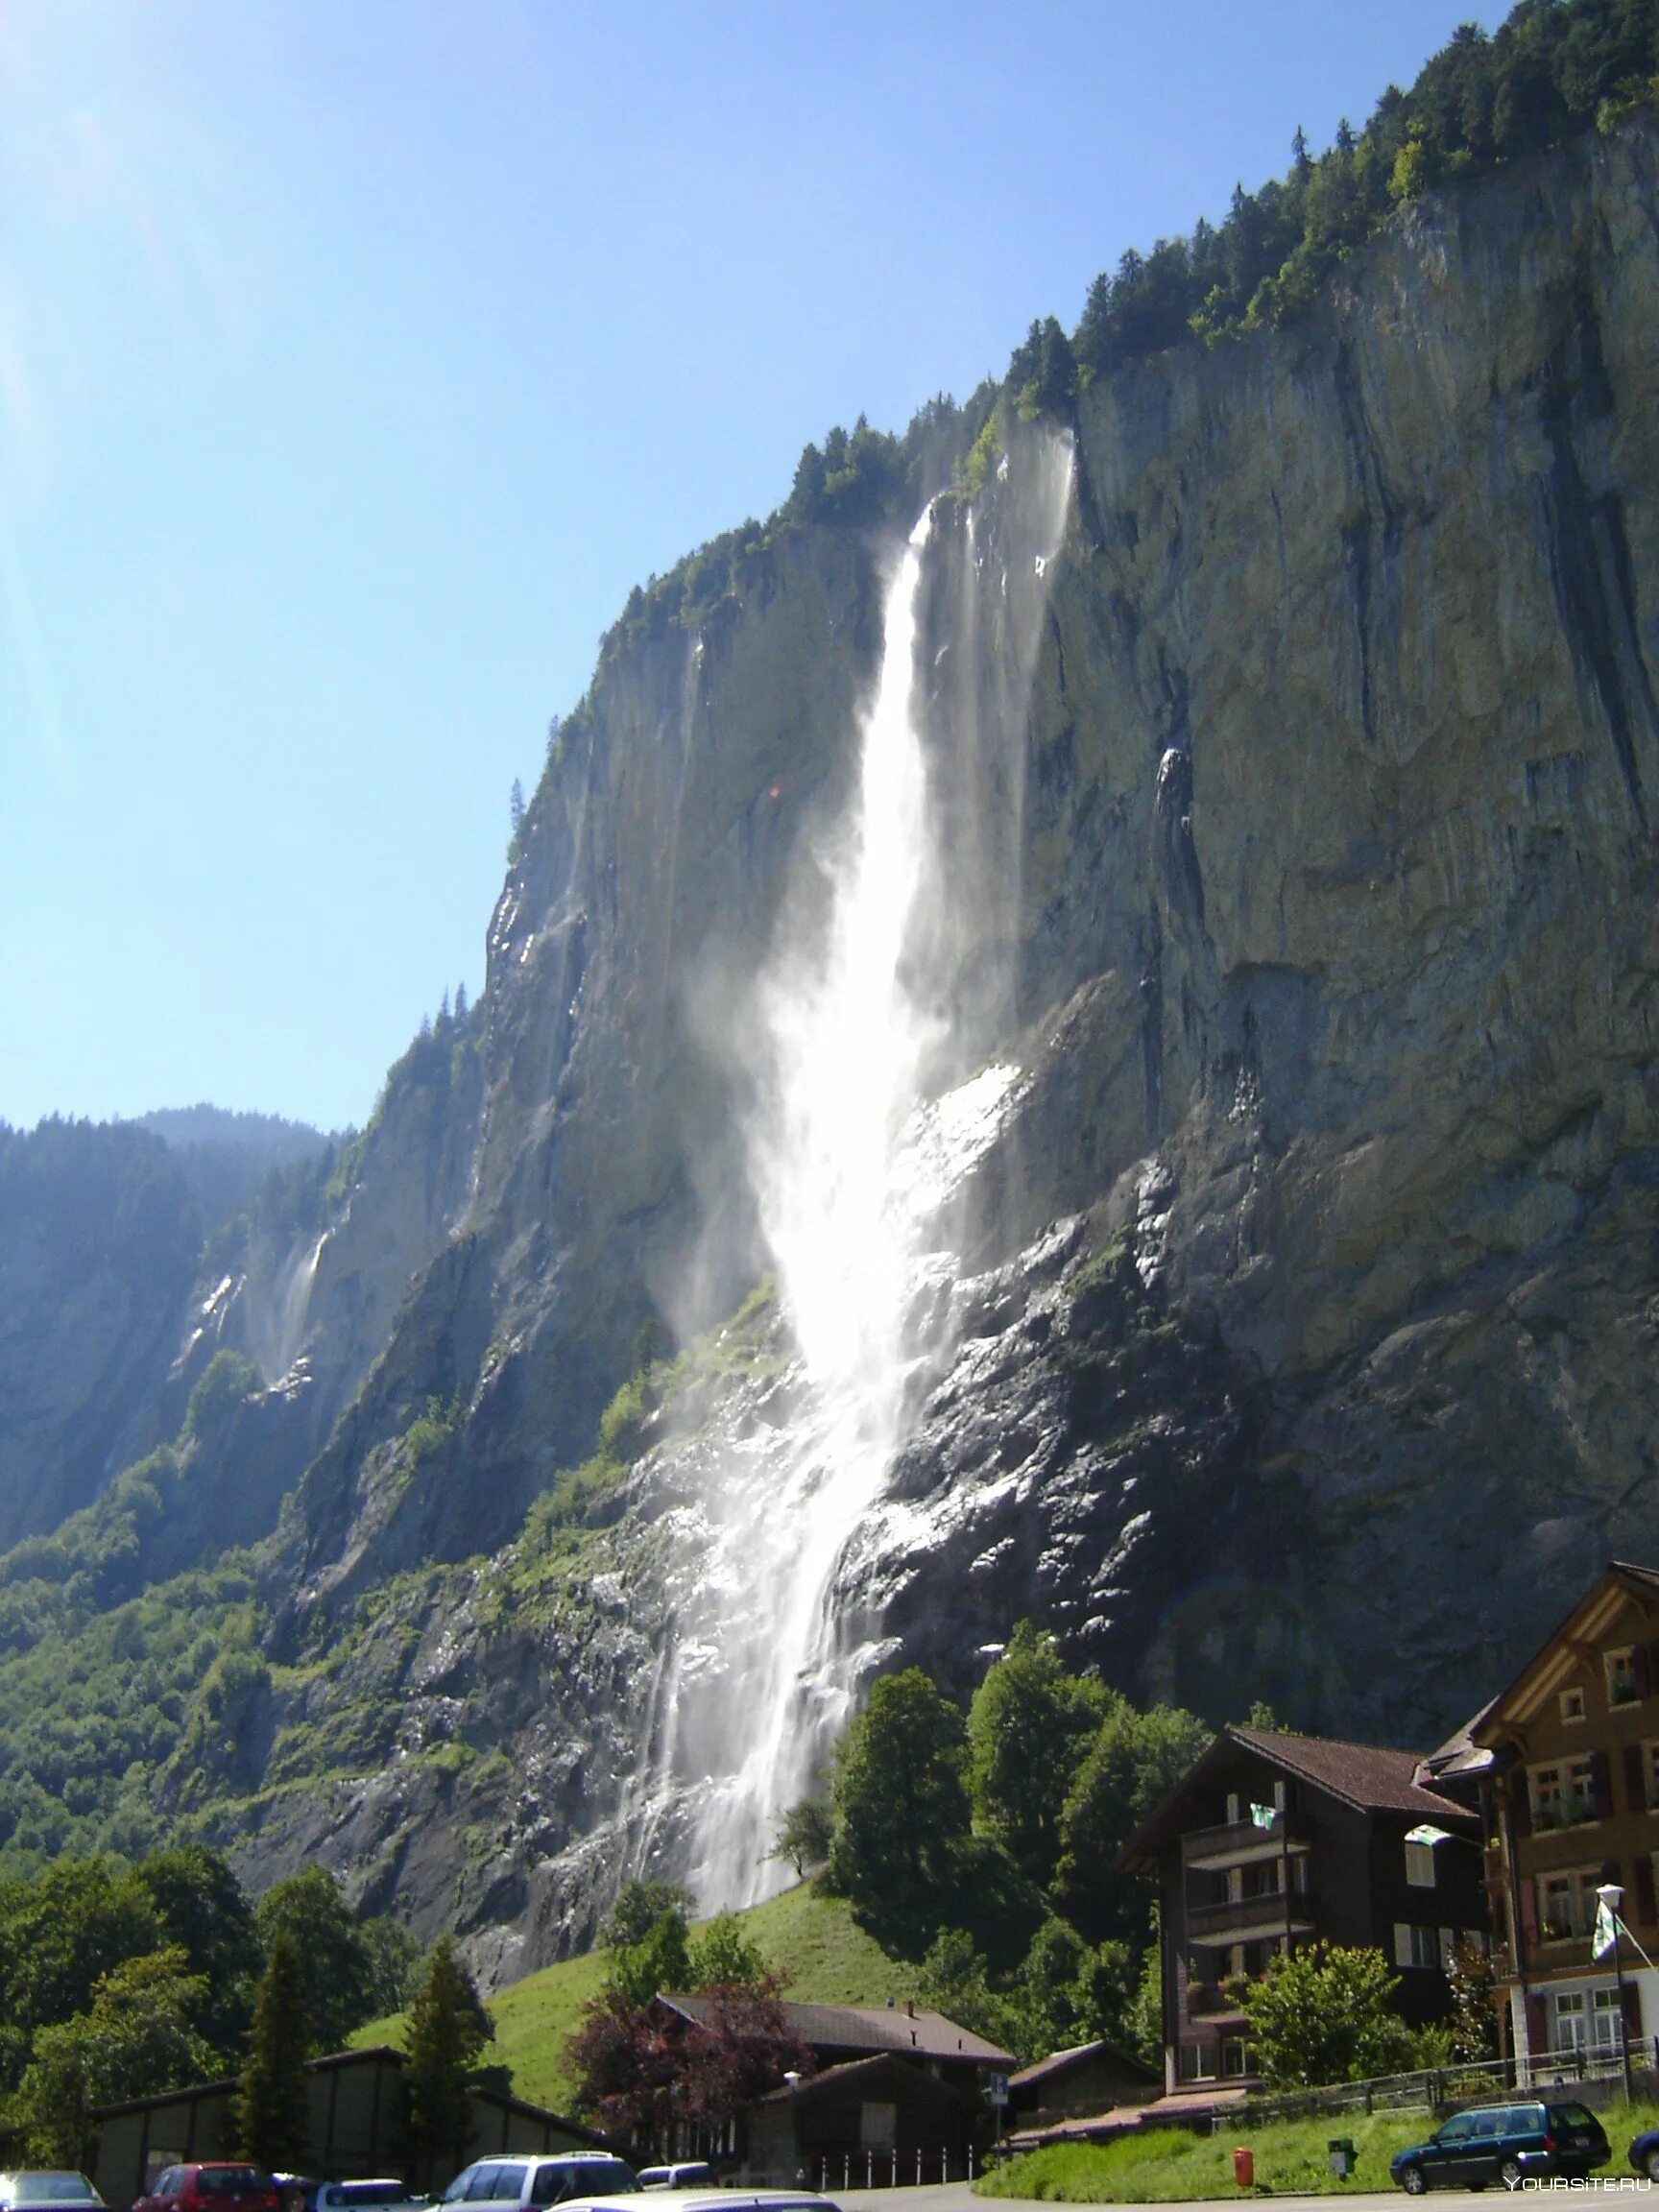 Альпийский водопад. Долина Лаутербруннен Швейцария. Водопад Штауббах в Швейцарии. Долина водопадов Швейцария Лаутербруннен. Водопад Штауббах в долине Лаутербруннен.